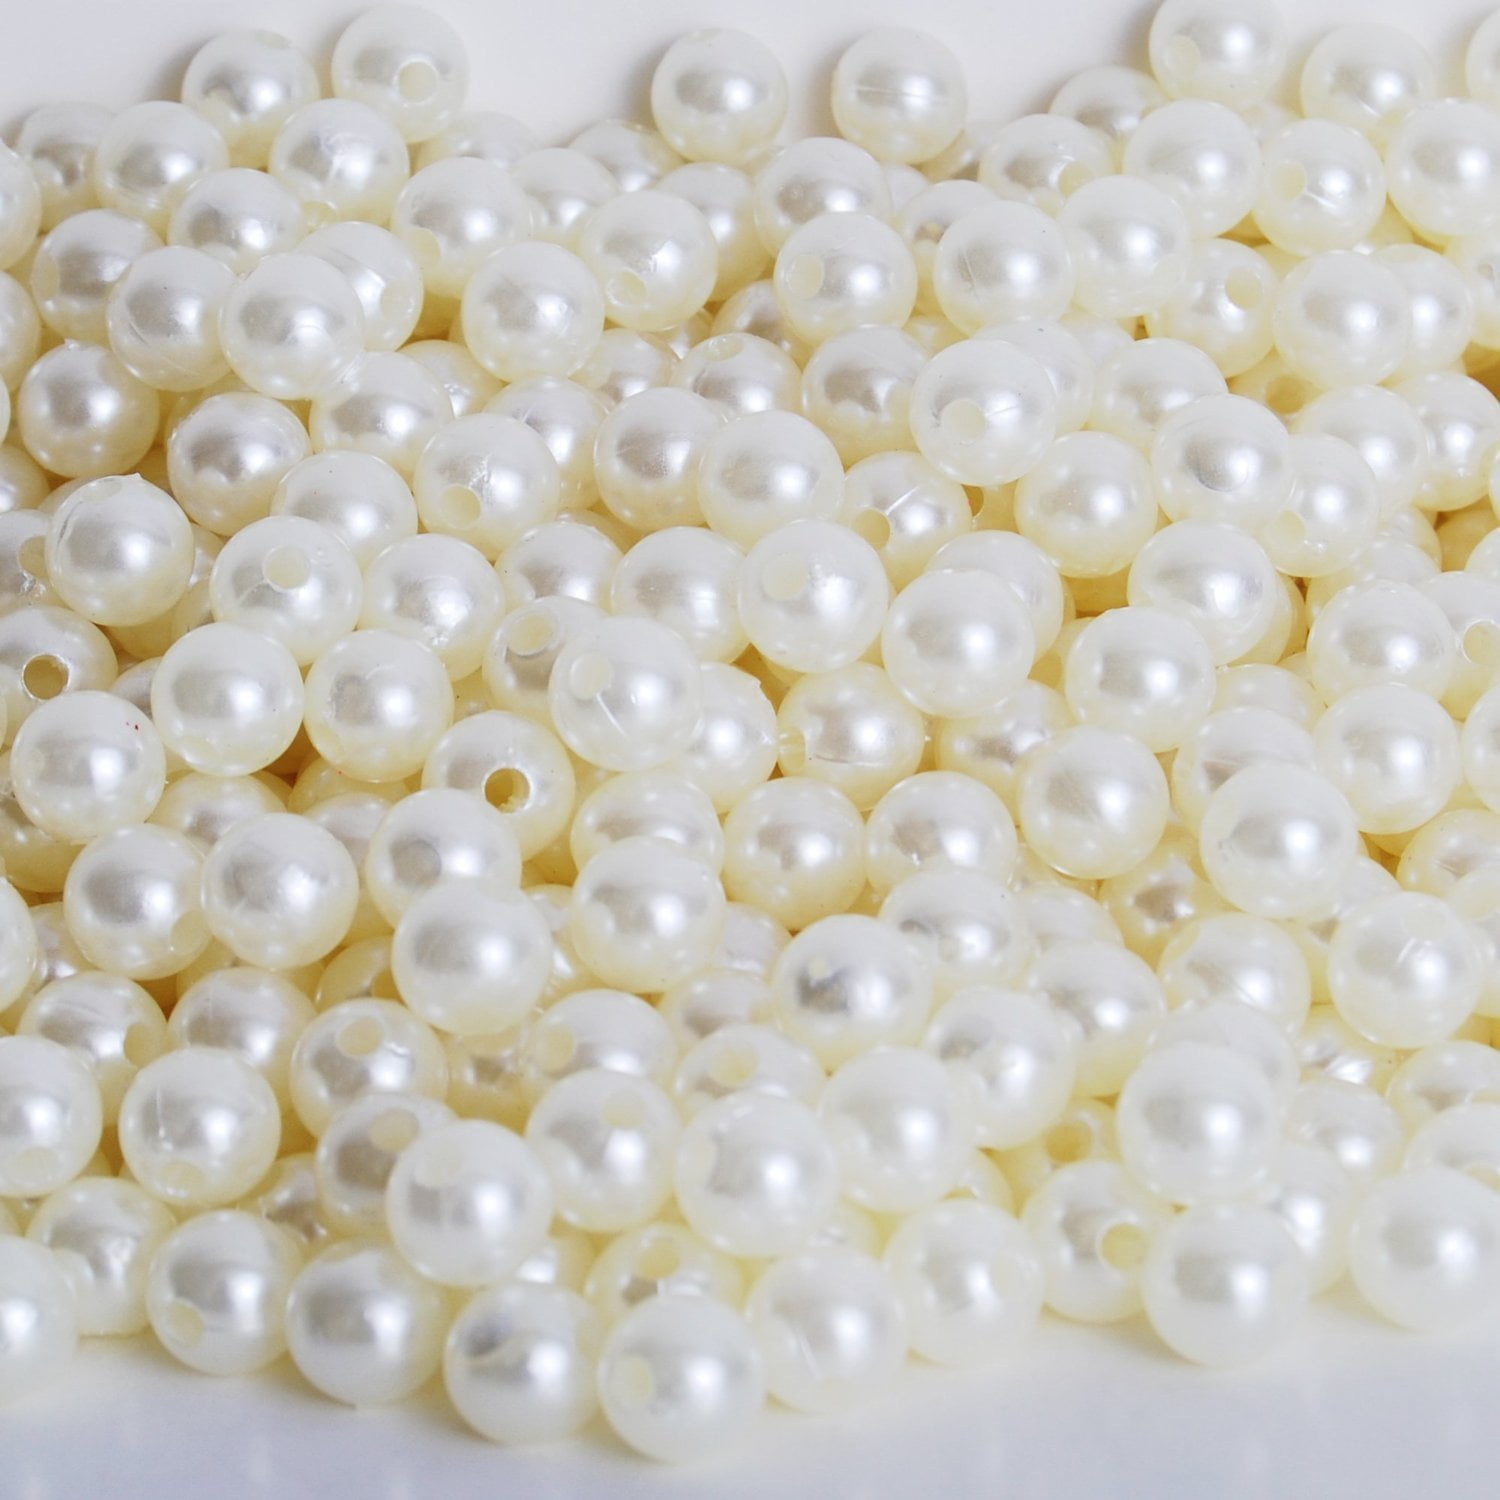 10mm Loose Pearls Table Decor Vase Filler Ivory  3 Pounds pack 